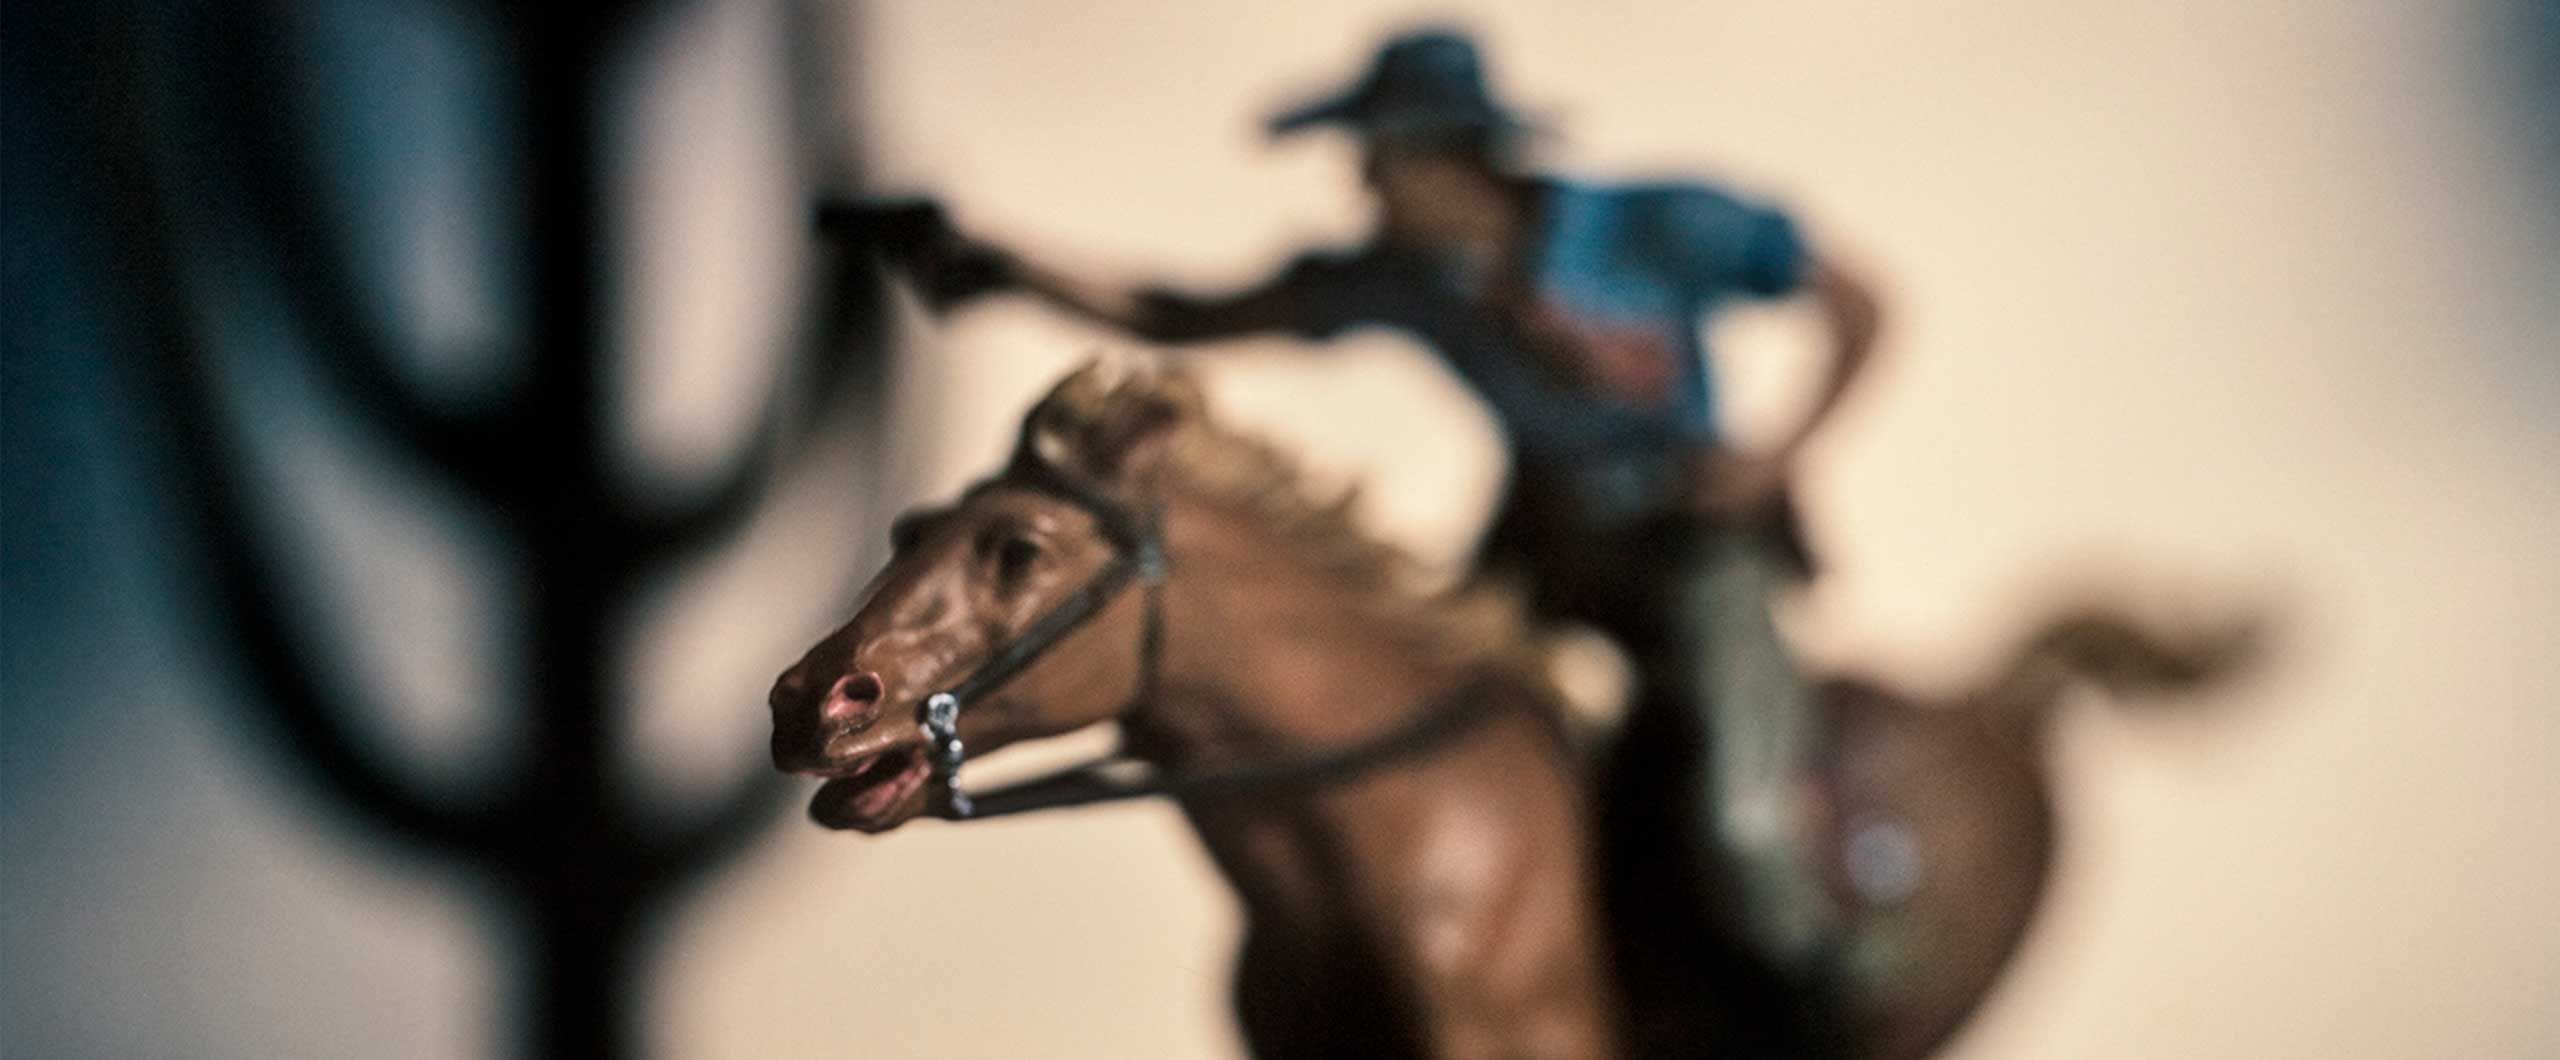 Christian Ladies Horse Animal Sex - Photographer David Levinthal: Nice Boy Shares Toy - Tablet Magazine